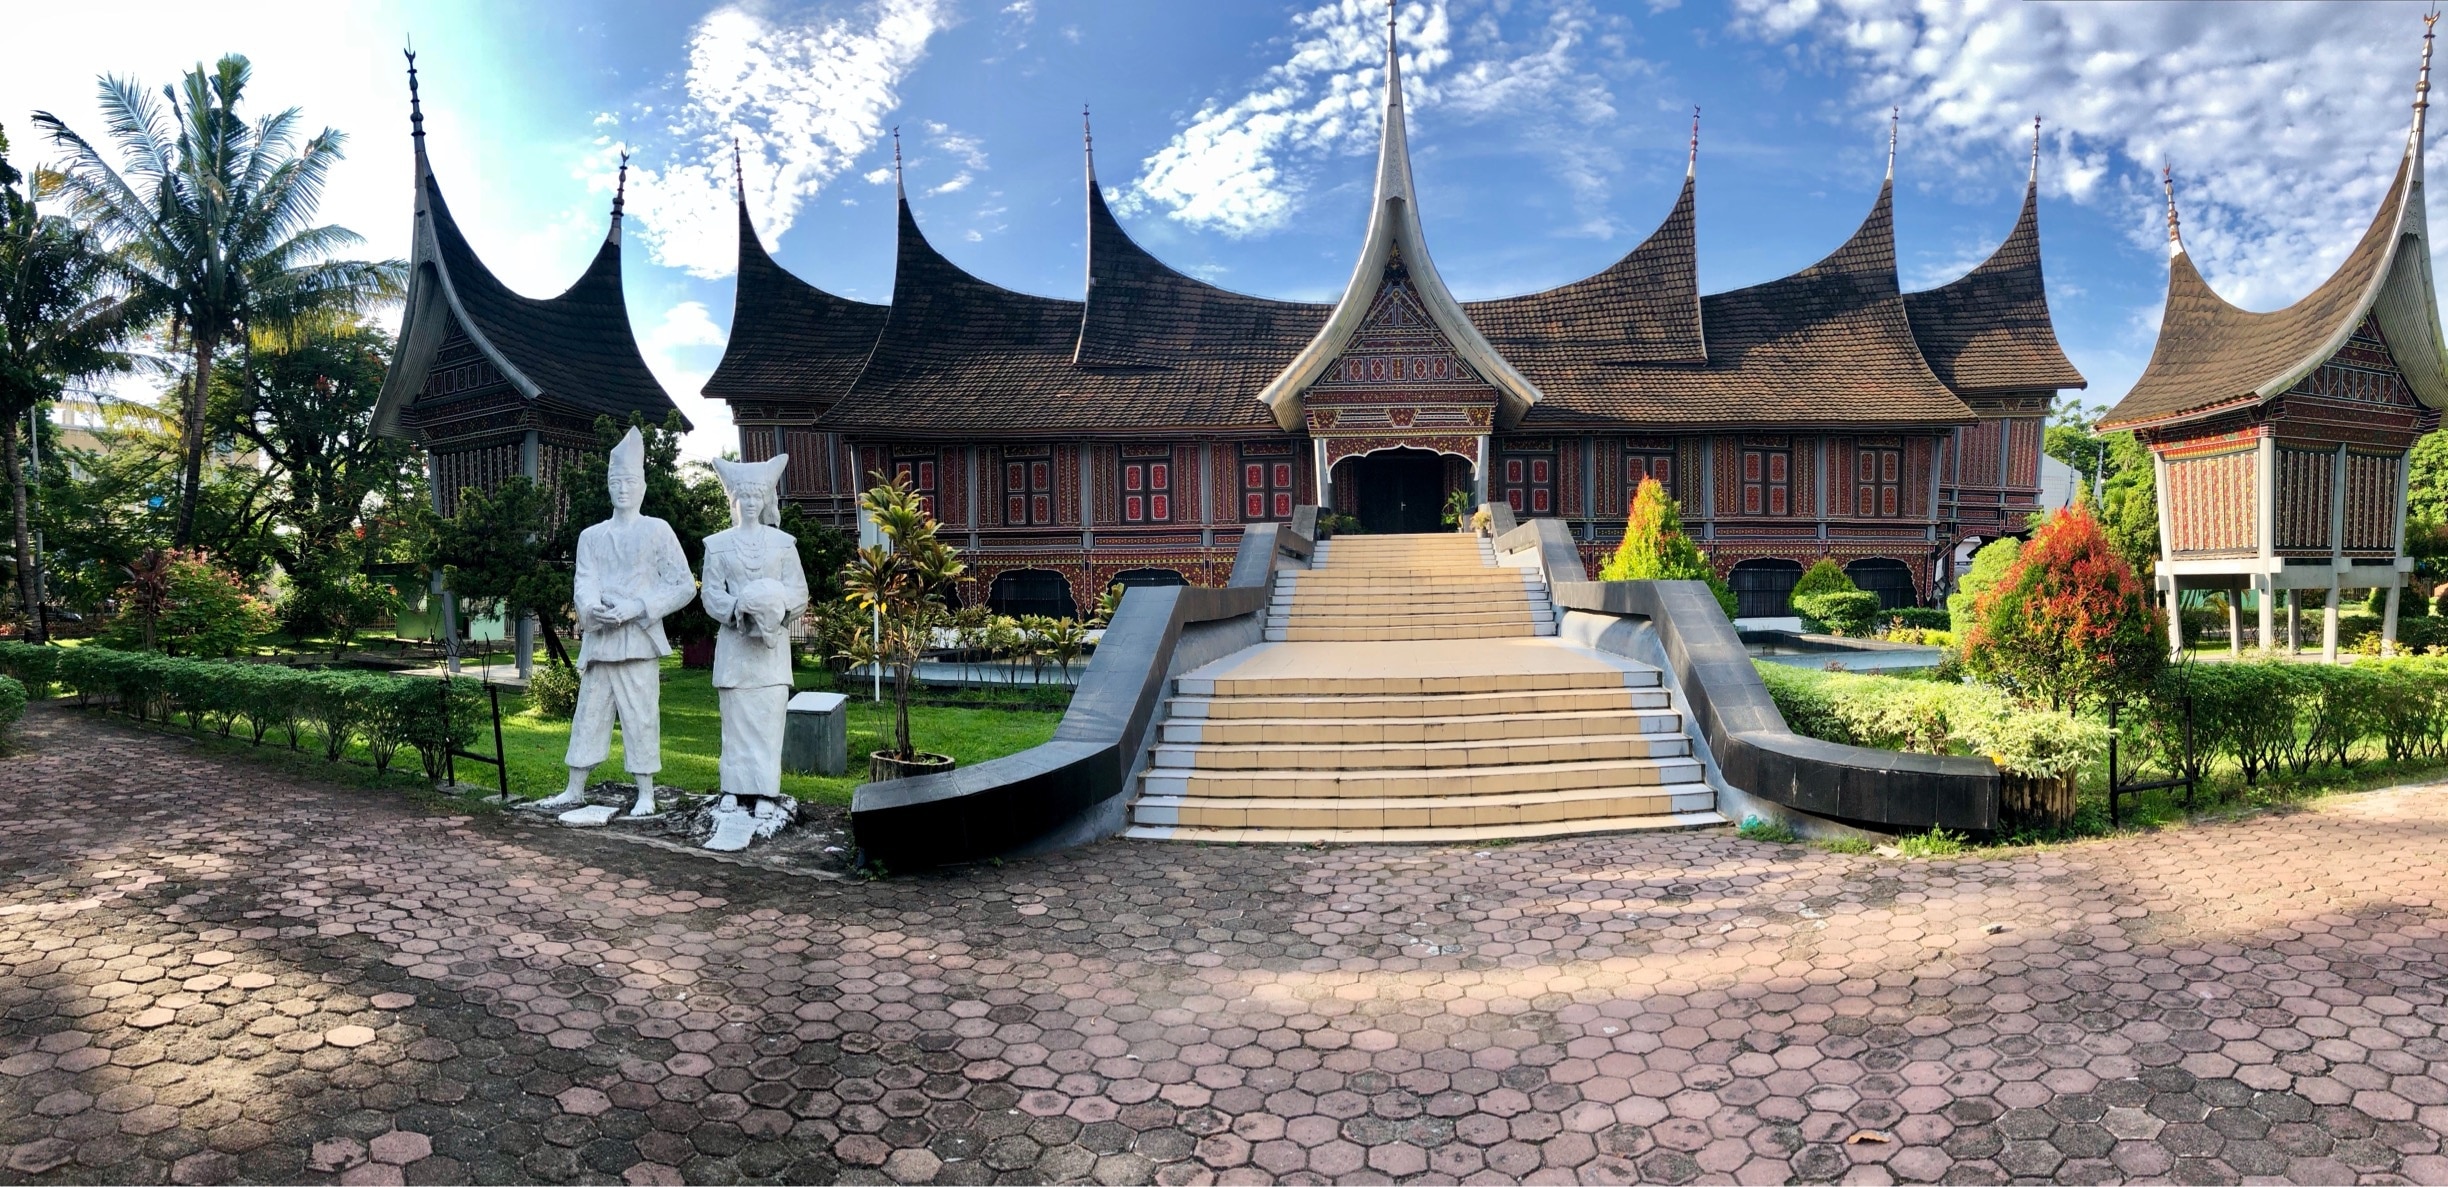 Rumah gadang
#traditionalhouse
#architecture
#padang
#westsumatera
#indonesia